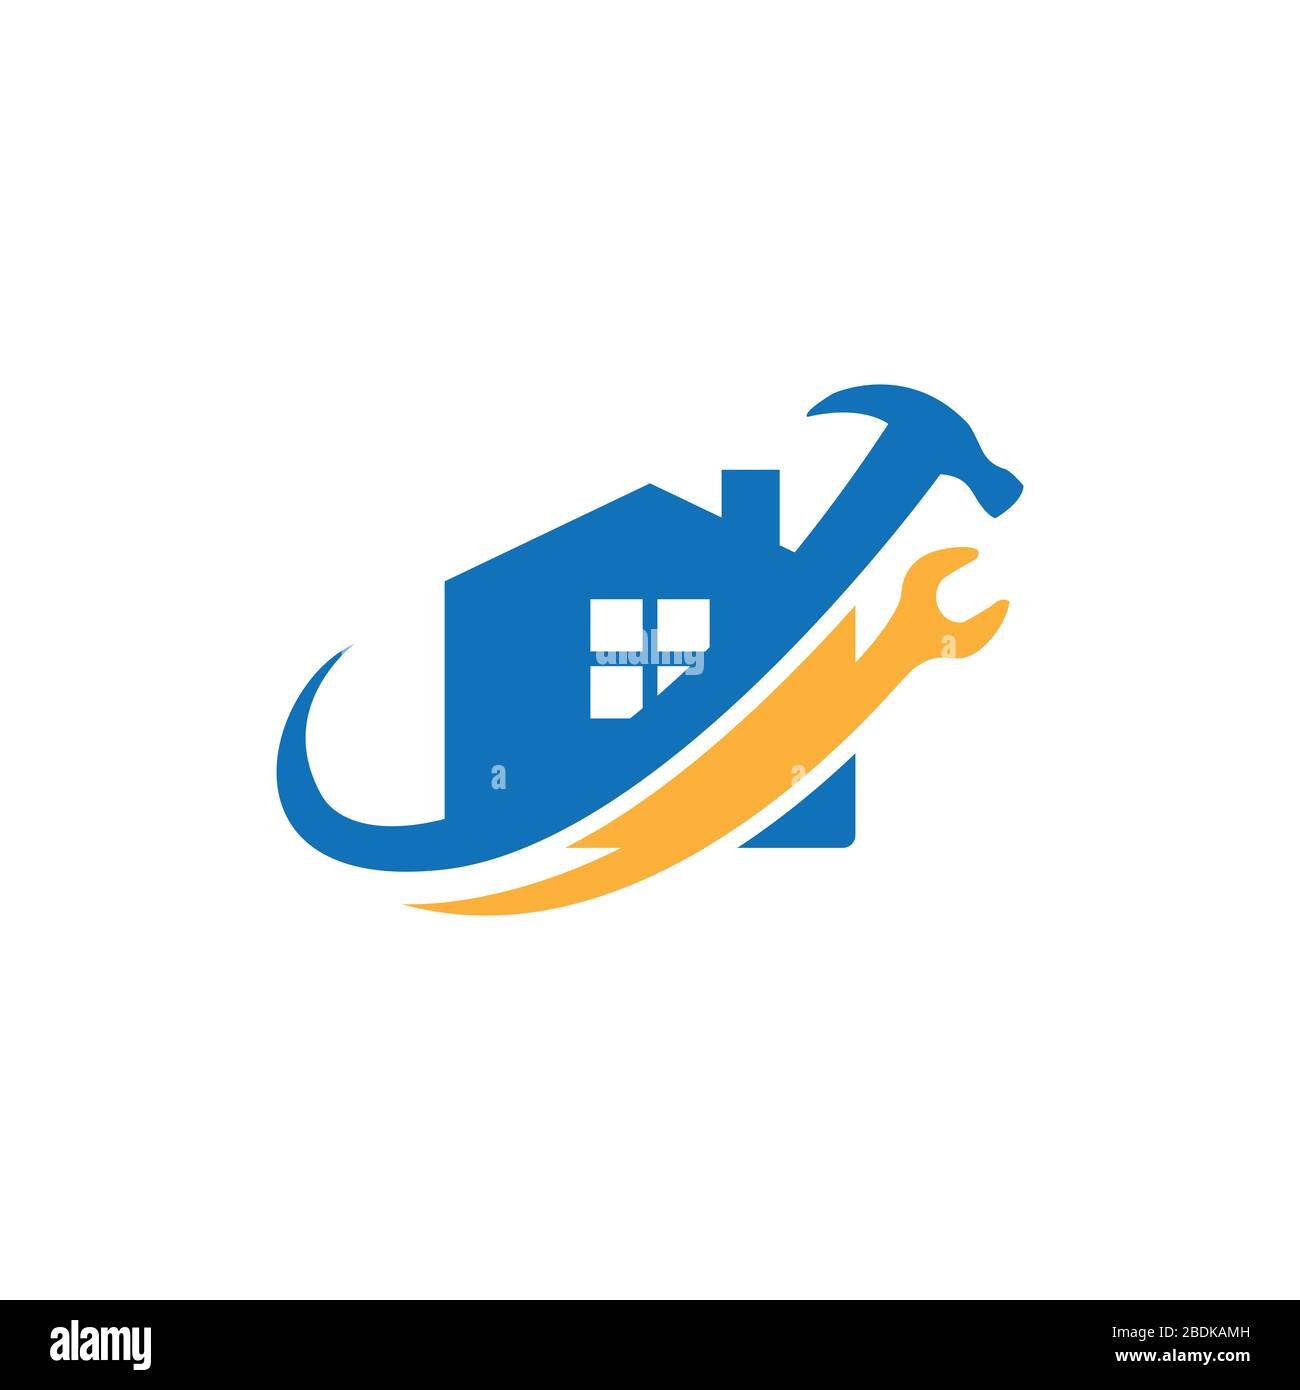 Creative home repair logo Premium Vector. Home repair logo with maintenance tools and house vector image Stock Vector